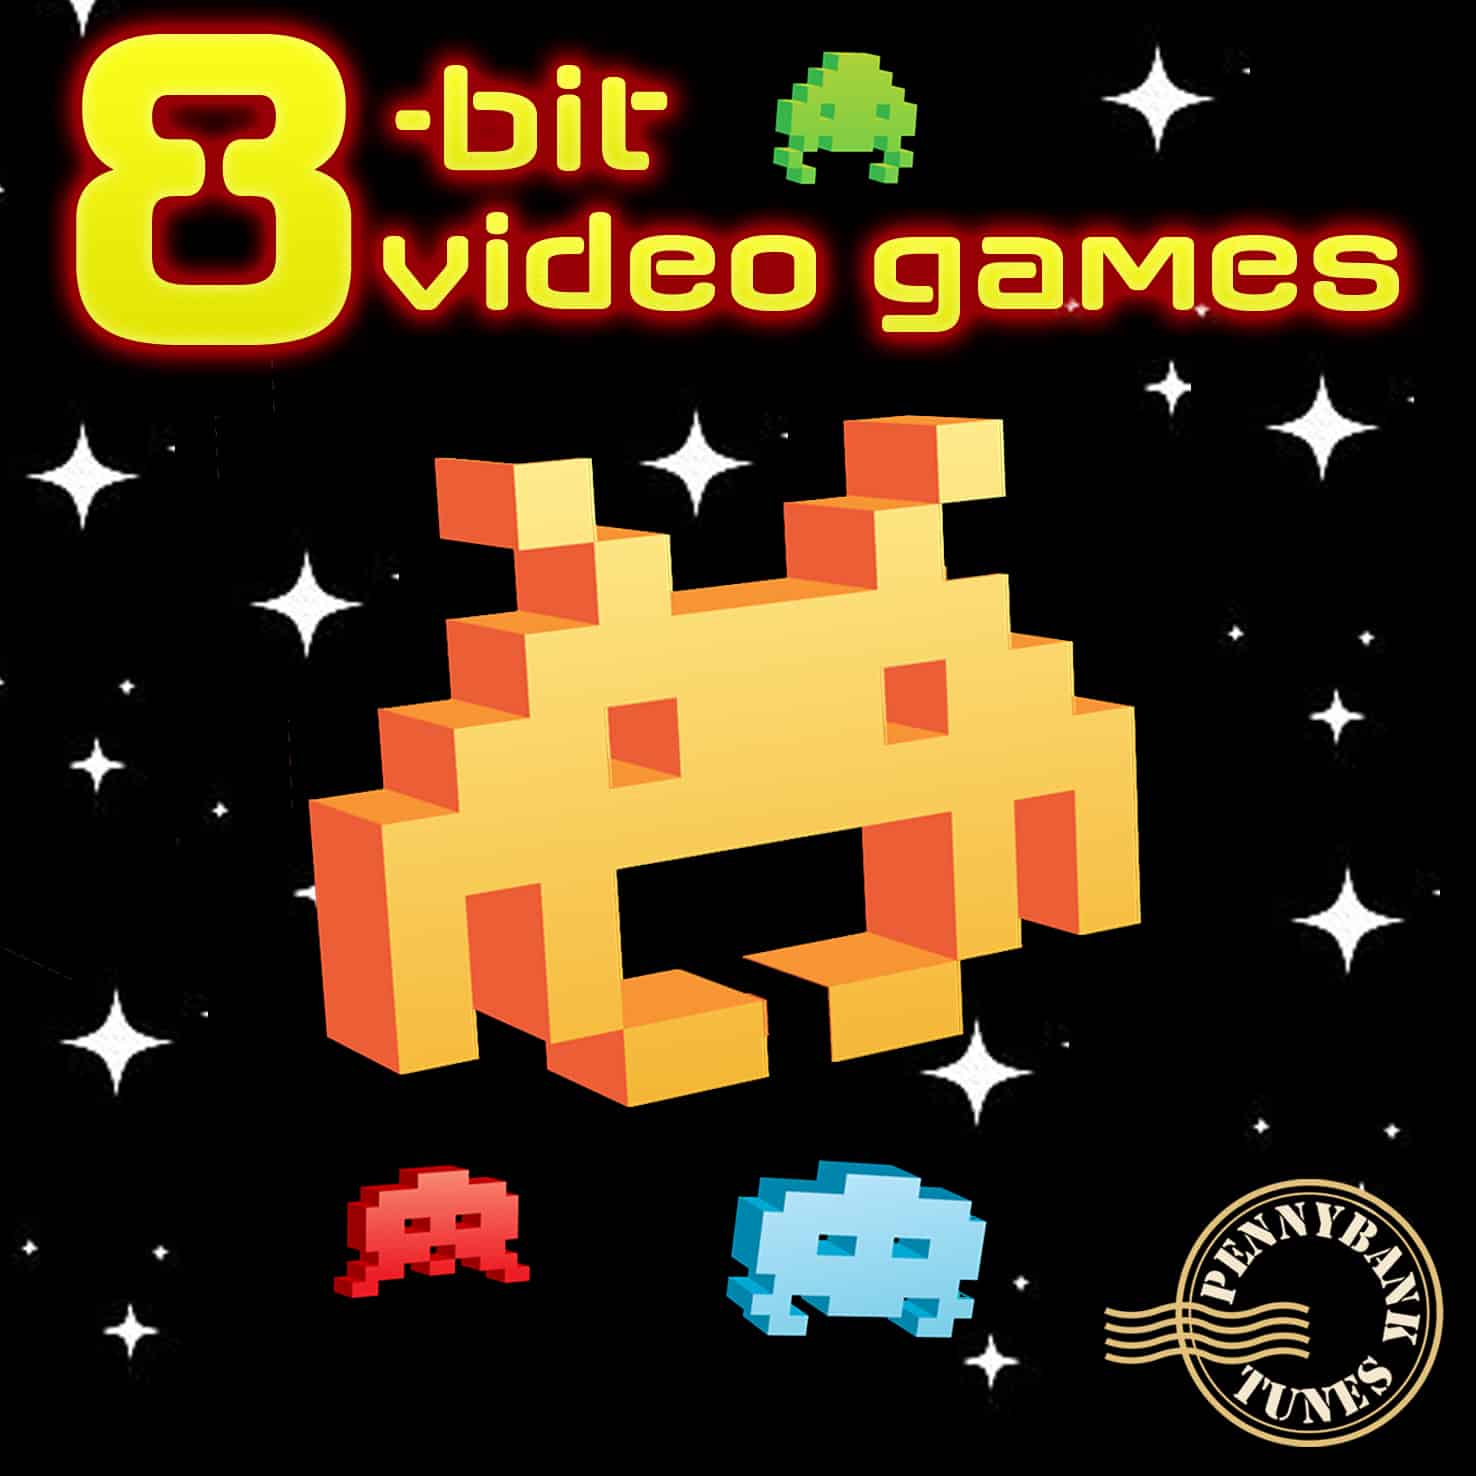 8-bit video games